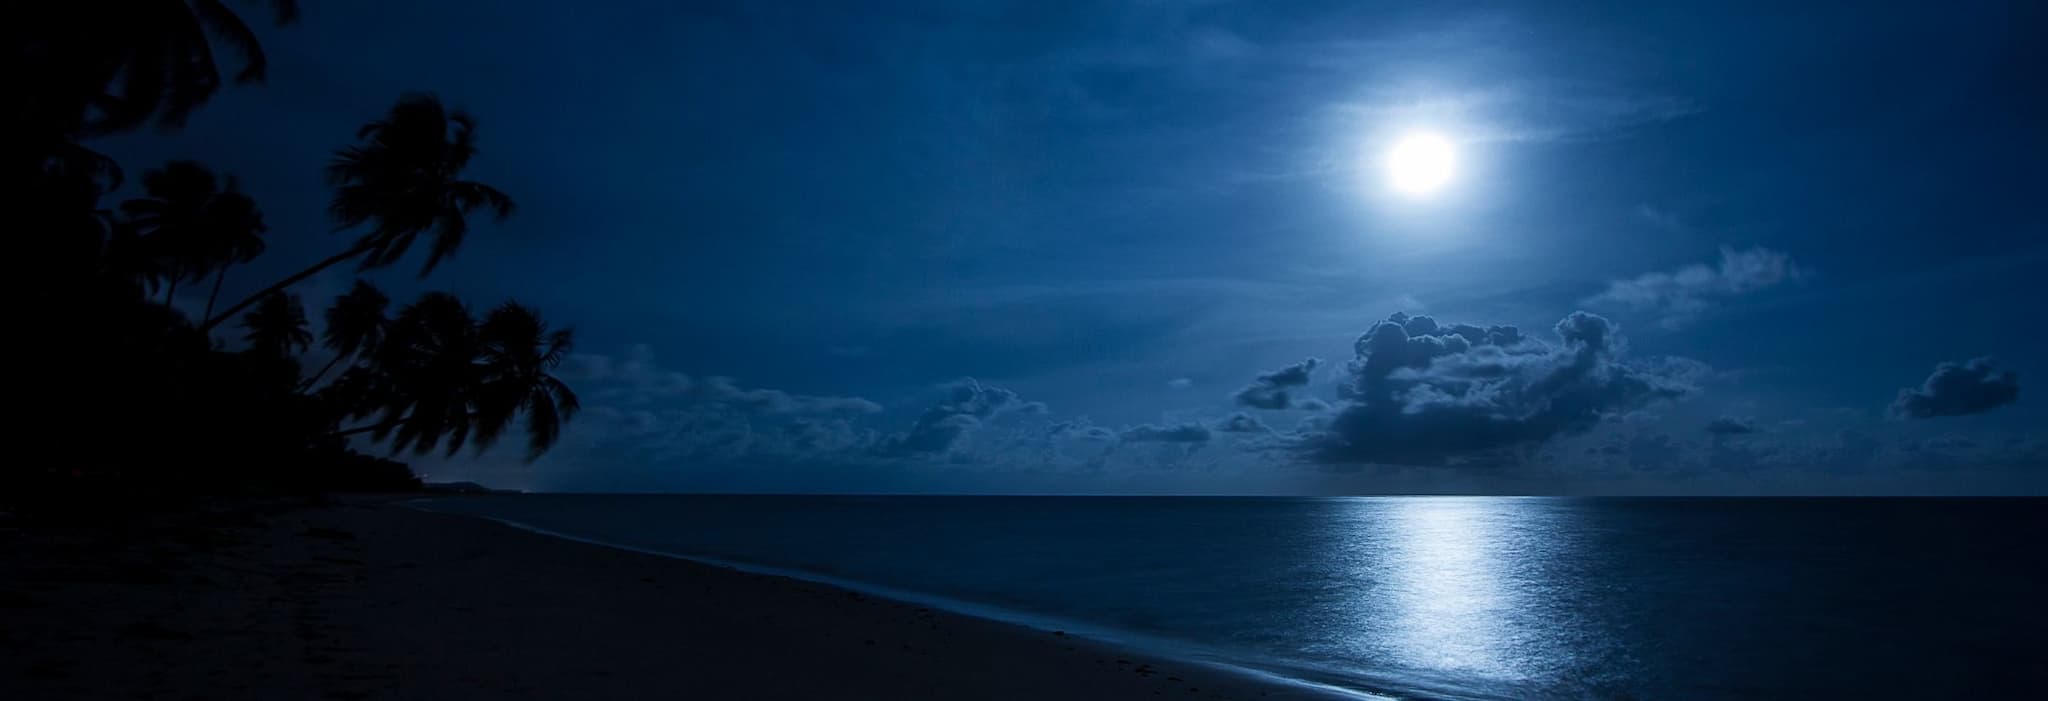 Capture the beauty of moon-lit sky